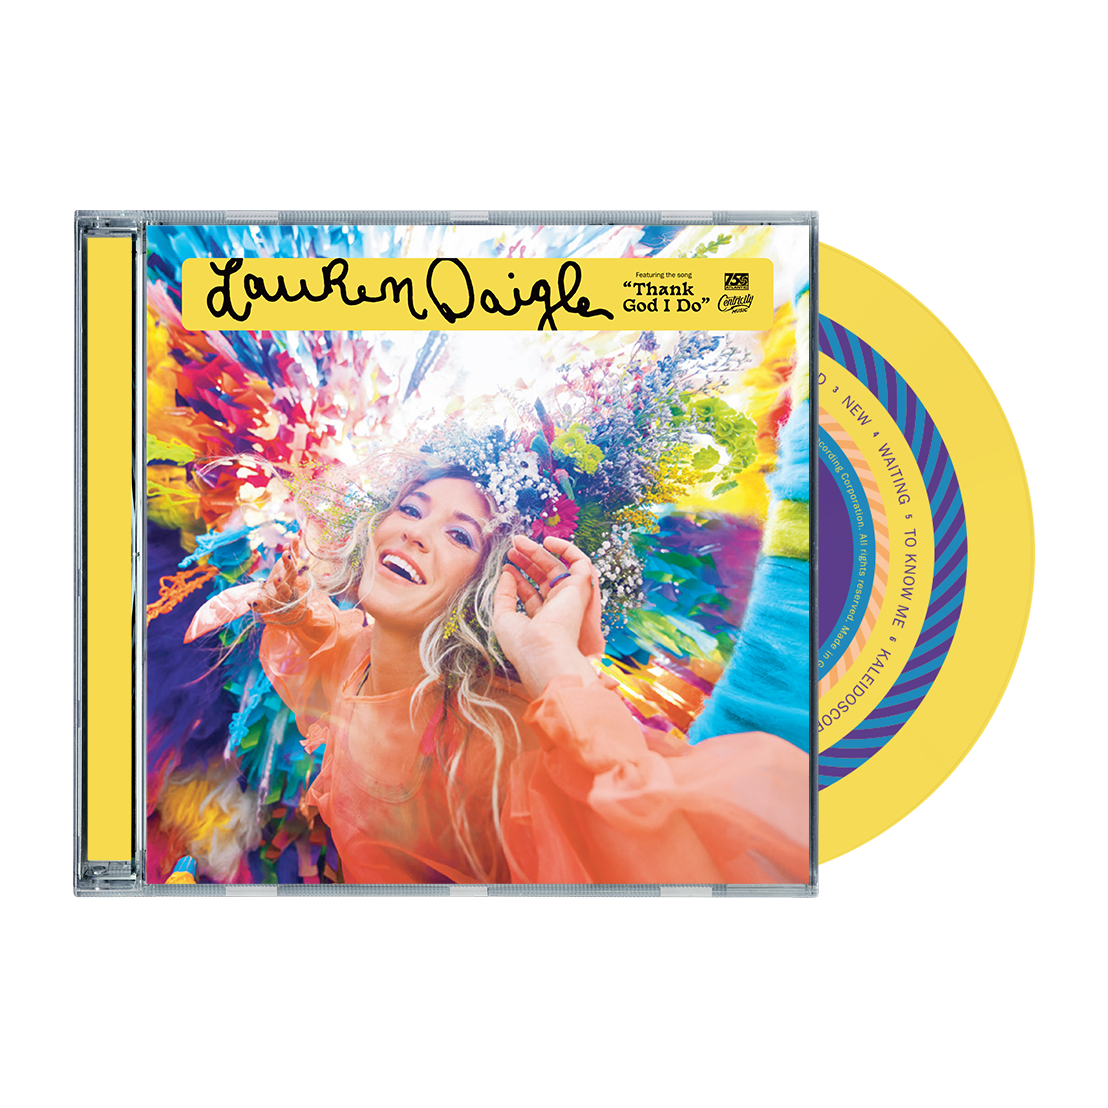 'Lauren Daigle' CD The Music Store